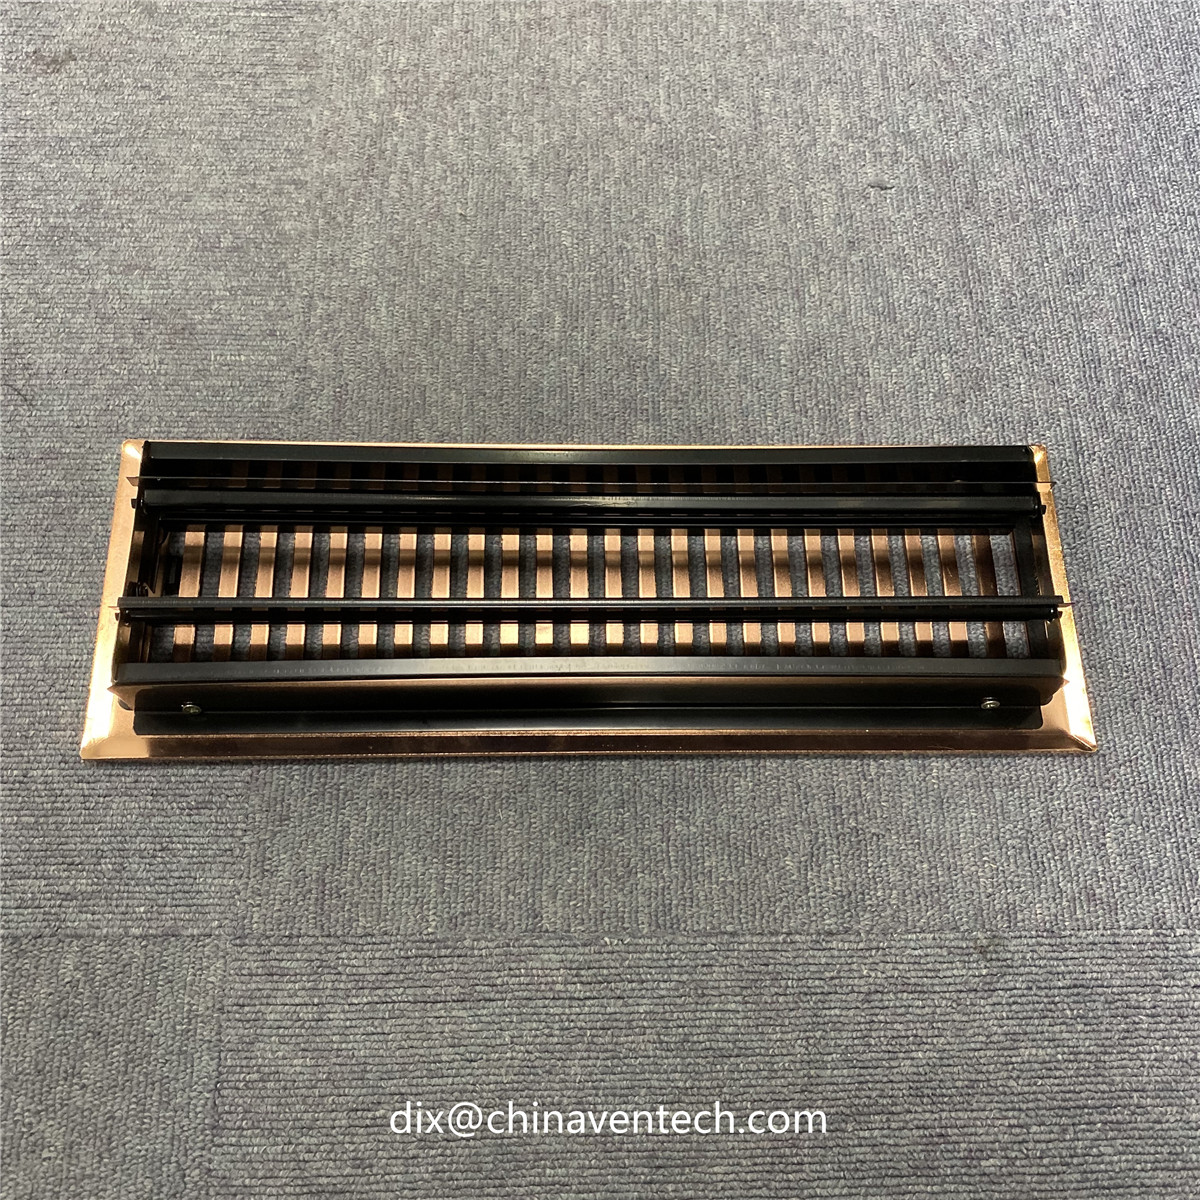 Hvac floor ventilaion used metal air recovery grille foor register